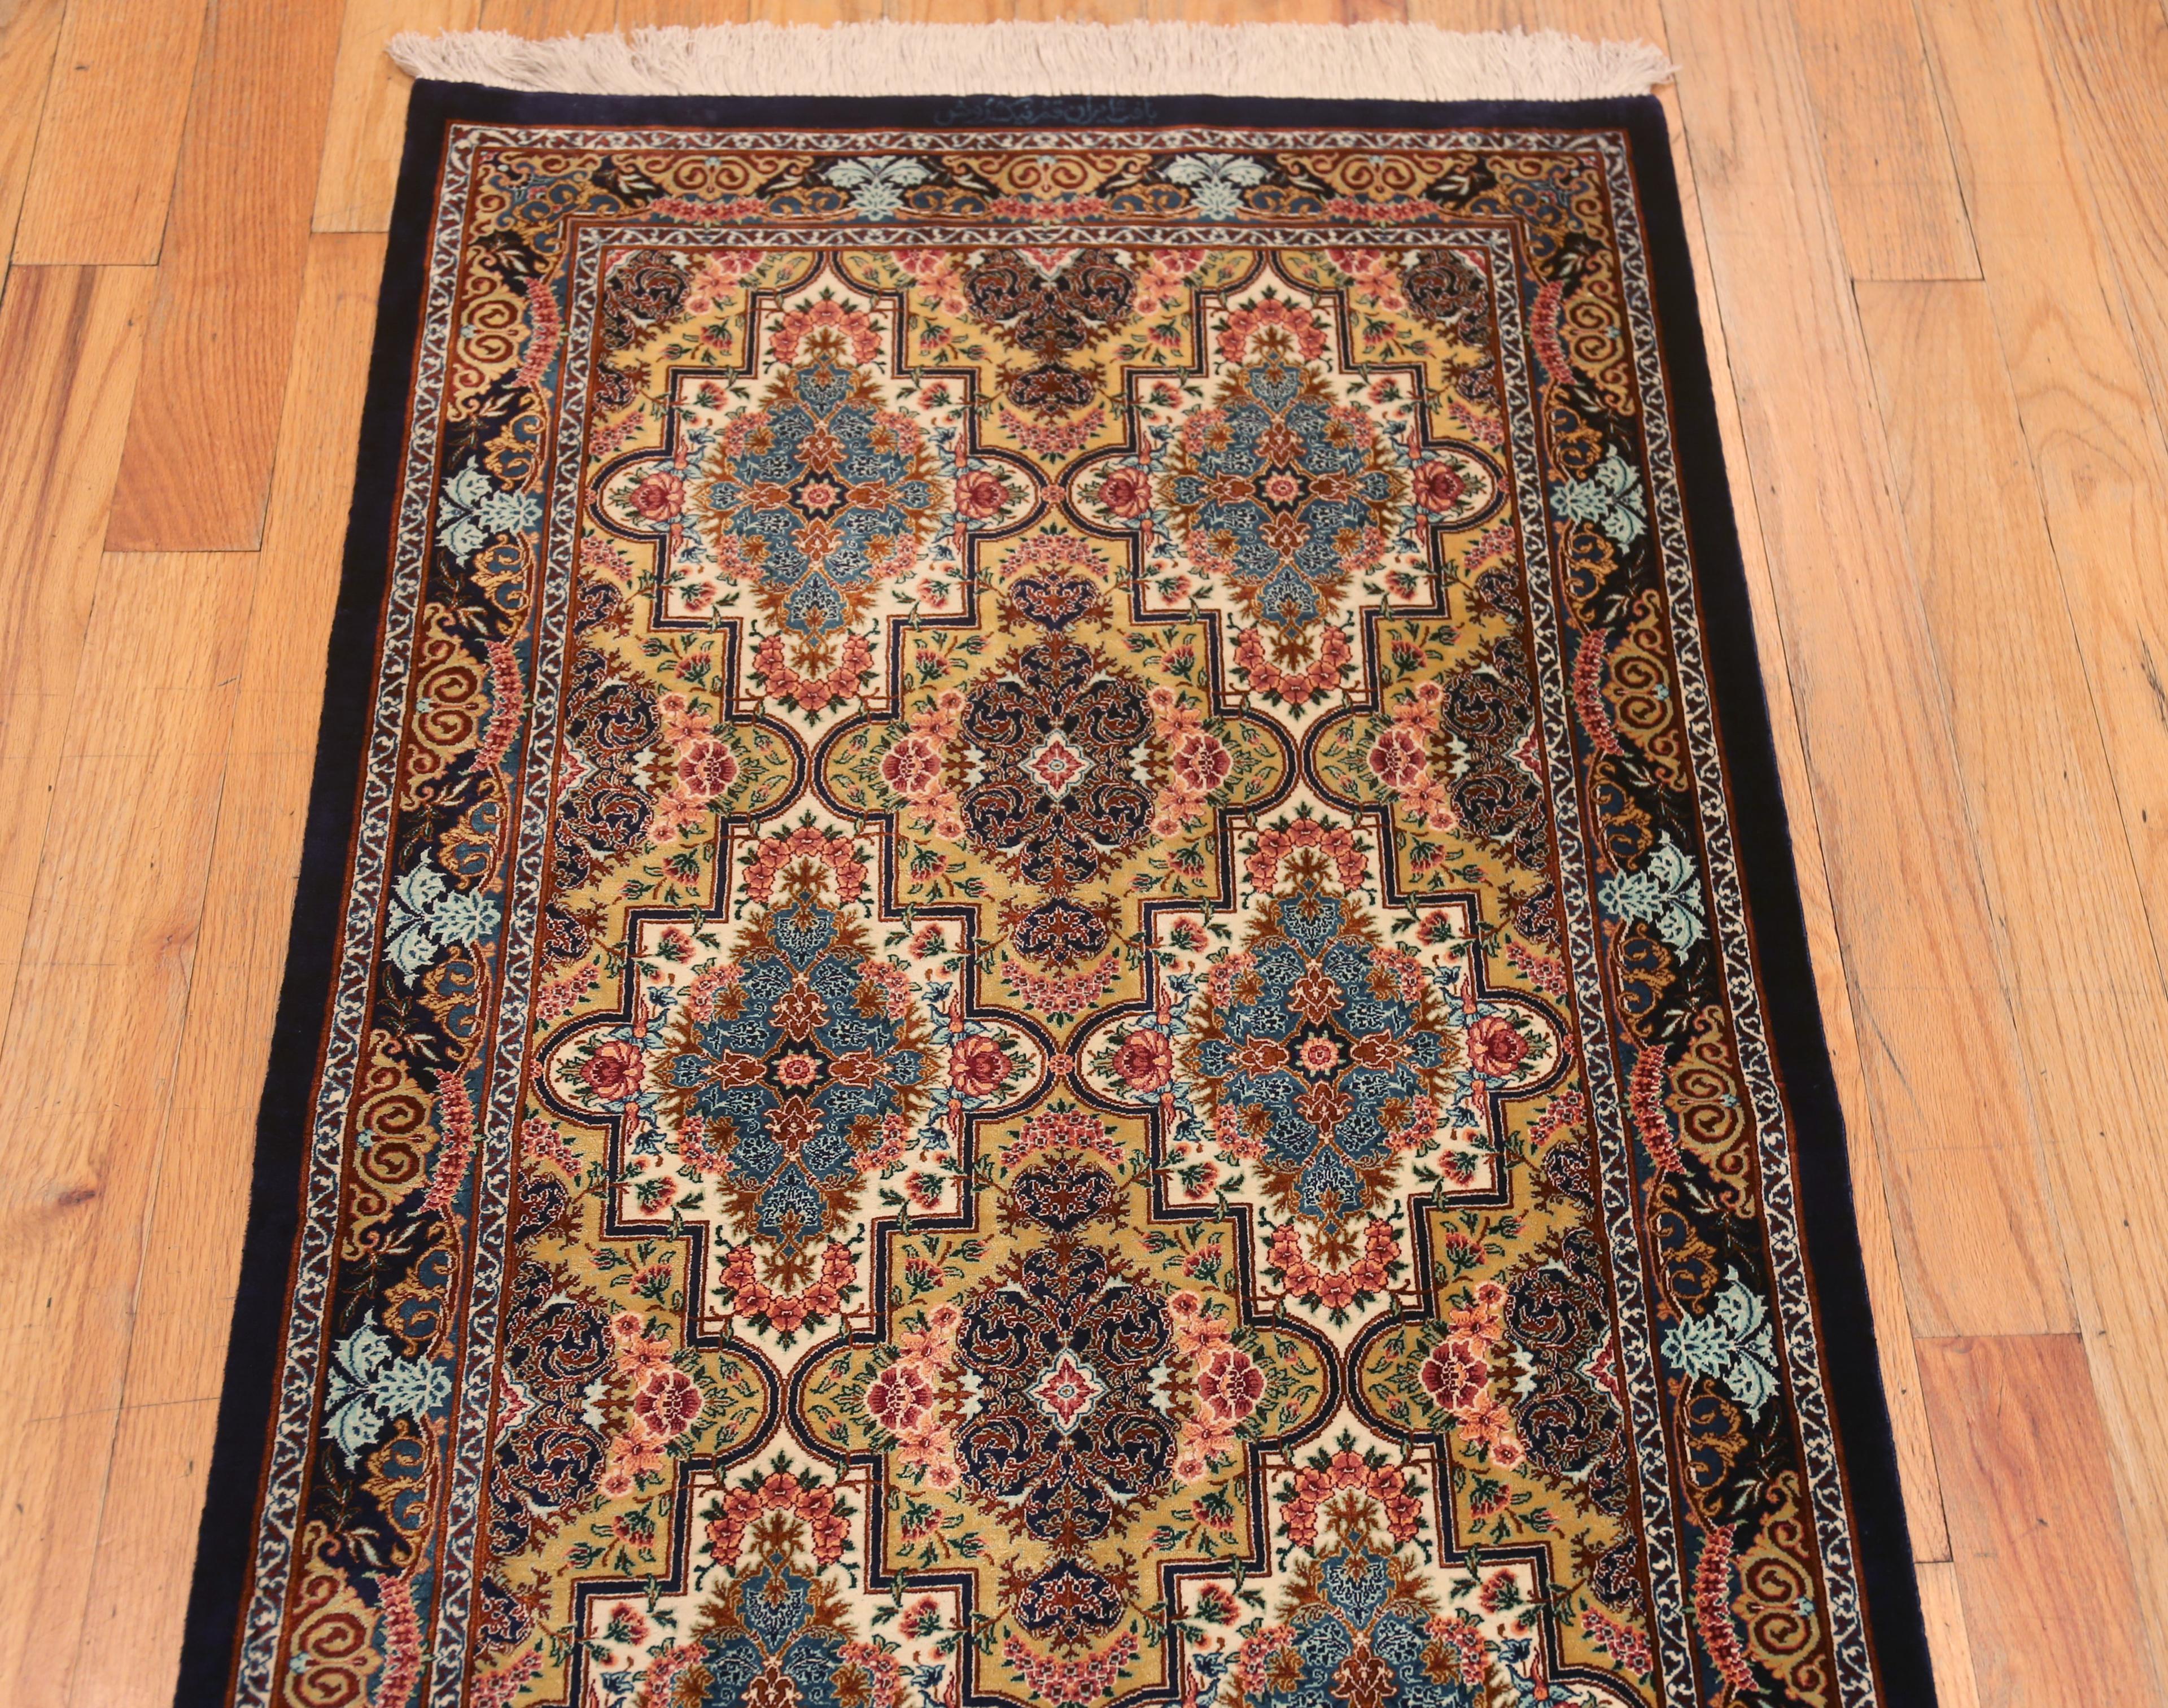 Intricate Fine Luxurious Persian Qum Silk Hallway Runner Rug, country of origin: Persian Rugs, Circa date: Vintage